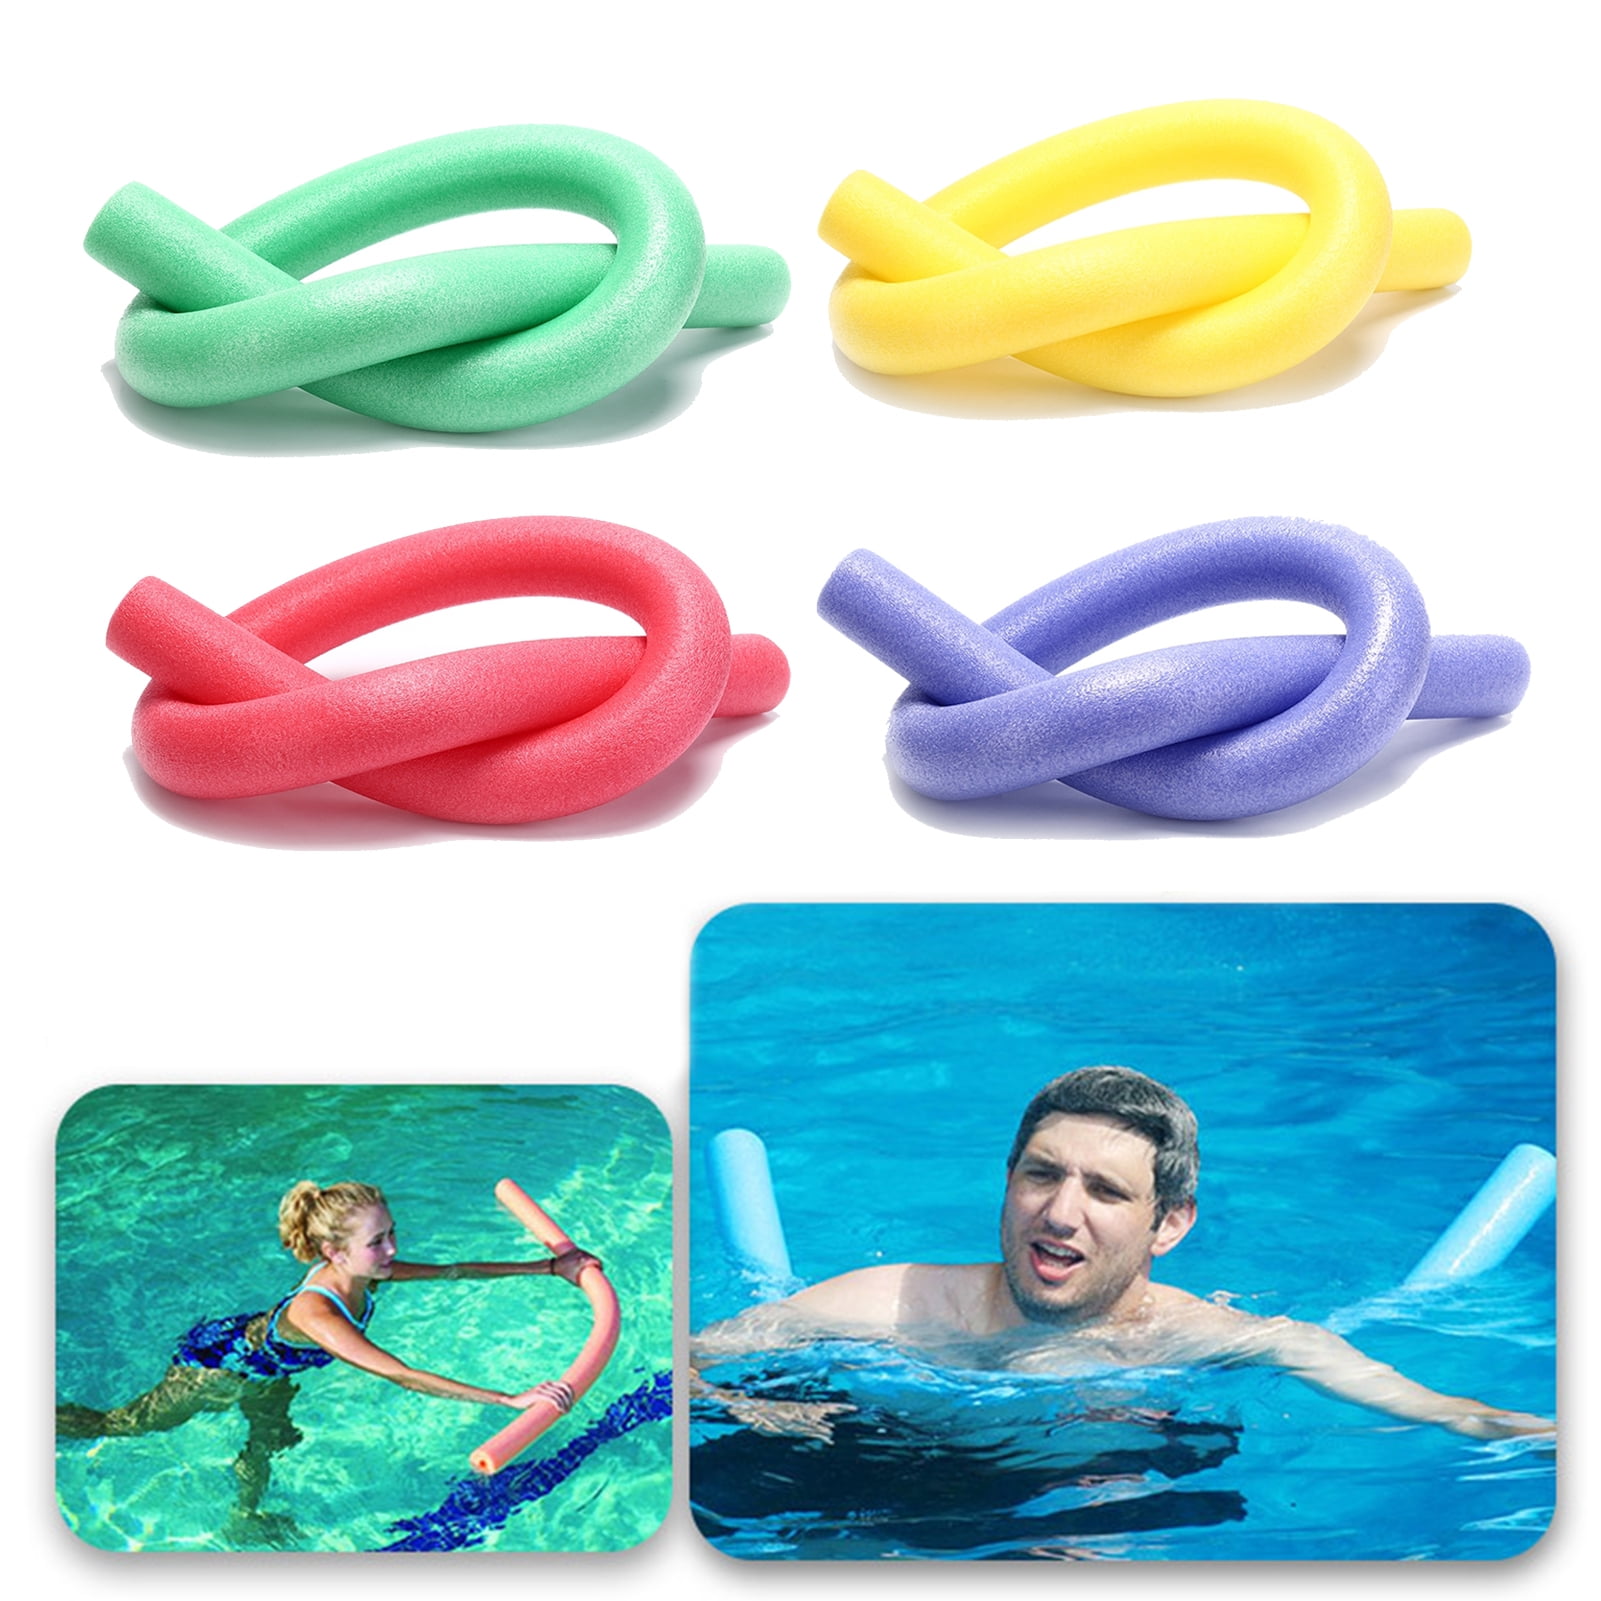 2x Rehabilitation Learn Swimming Pool Noodles Water Float Aid Swim Training 